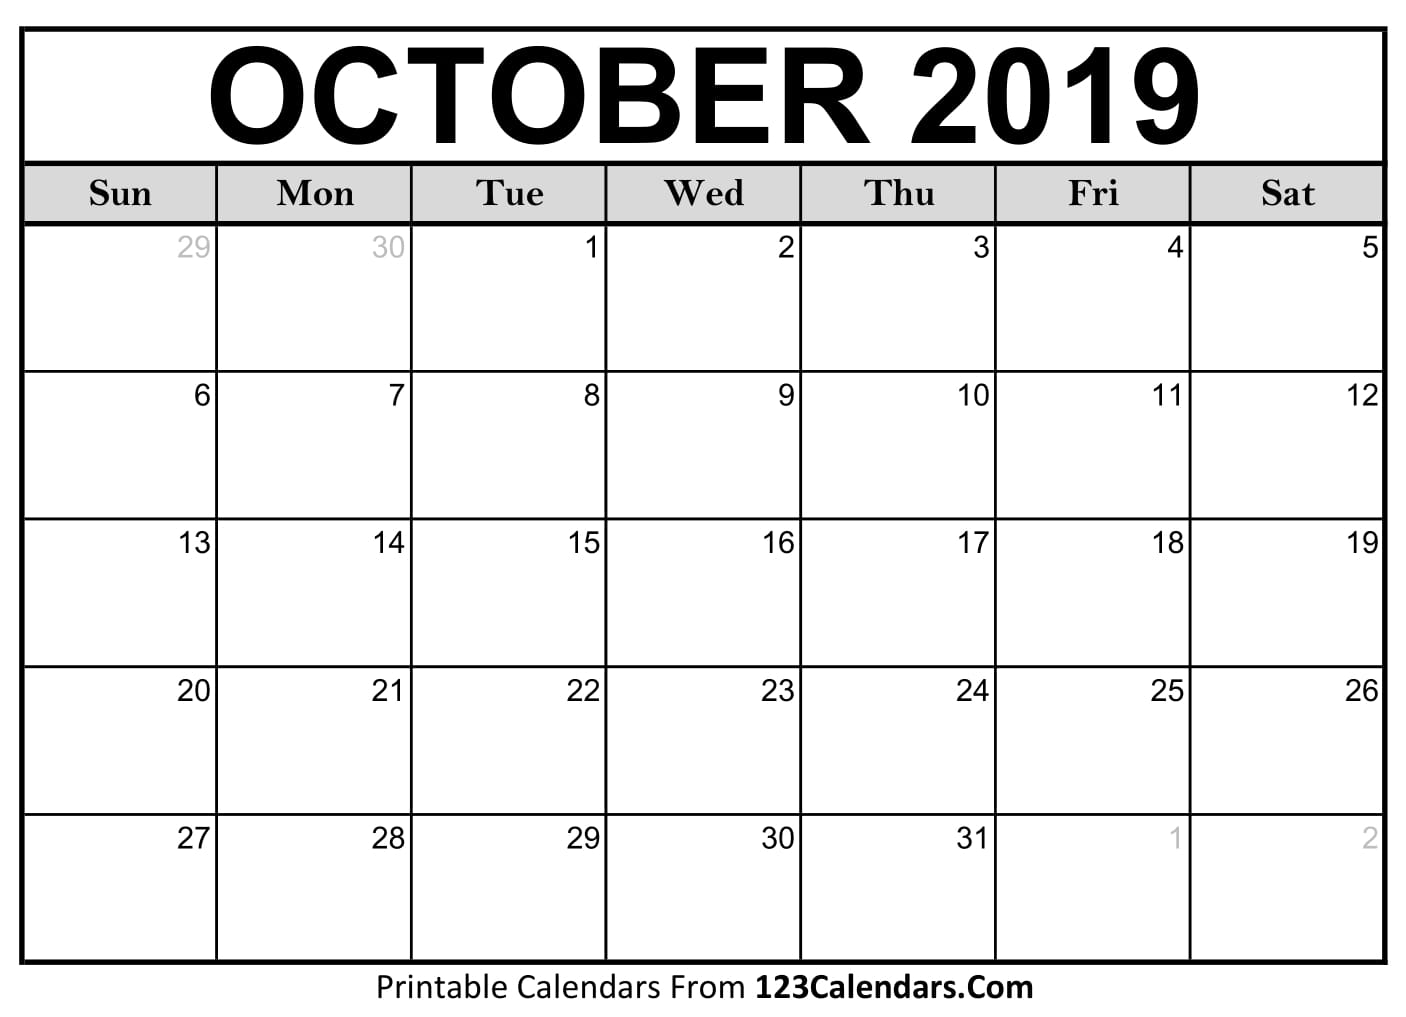 calendar-october-2018-uk-bank-holidays-excel-pdf-word-templates